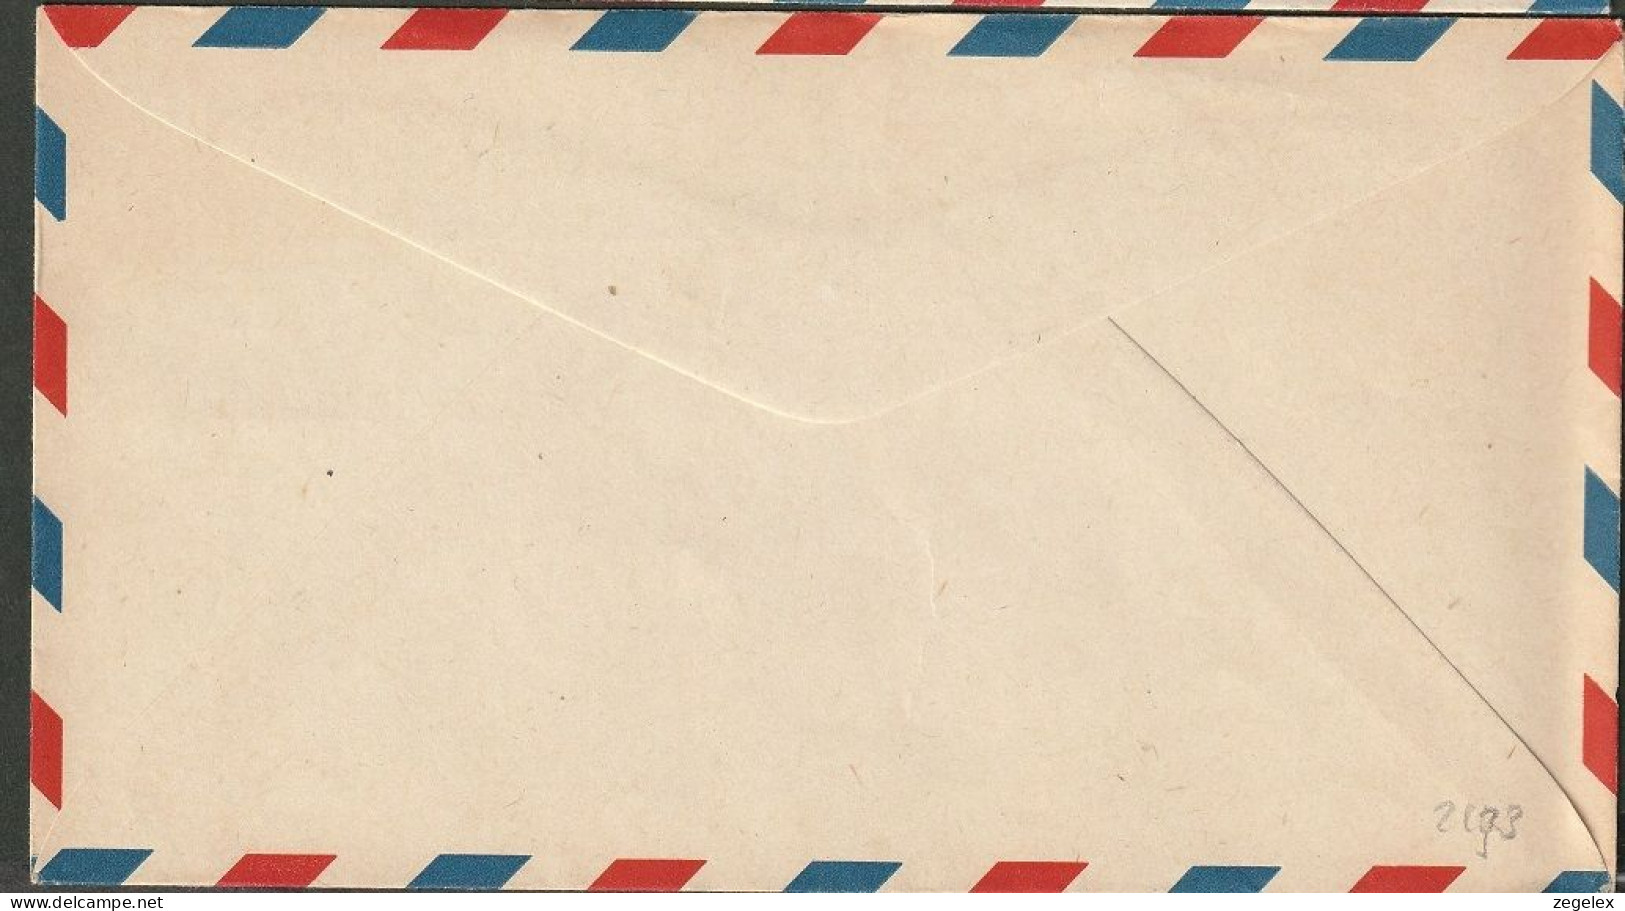 United States - Postal Stationary. 1947 Airmail - Centenary International Philatelic Exhibition. UC17 ** - 1941-60